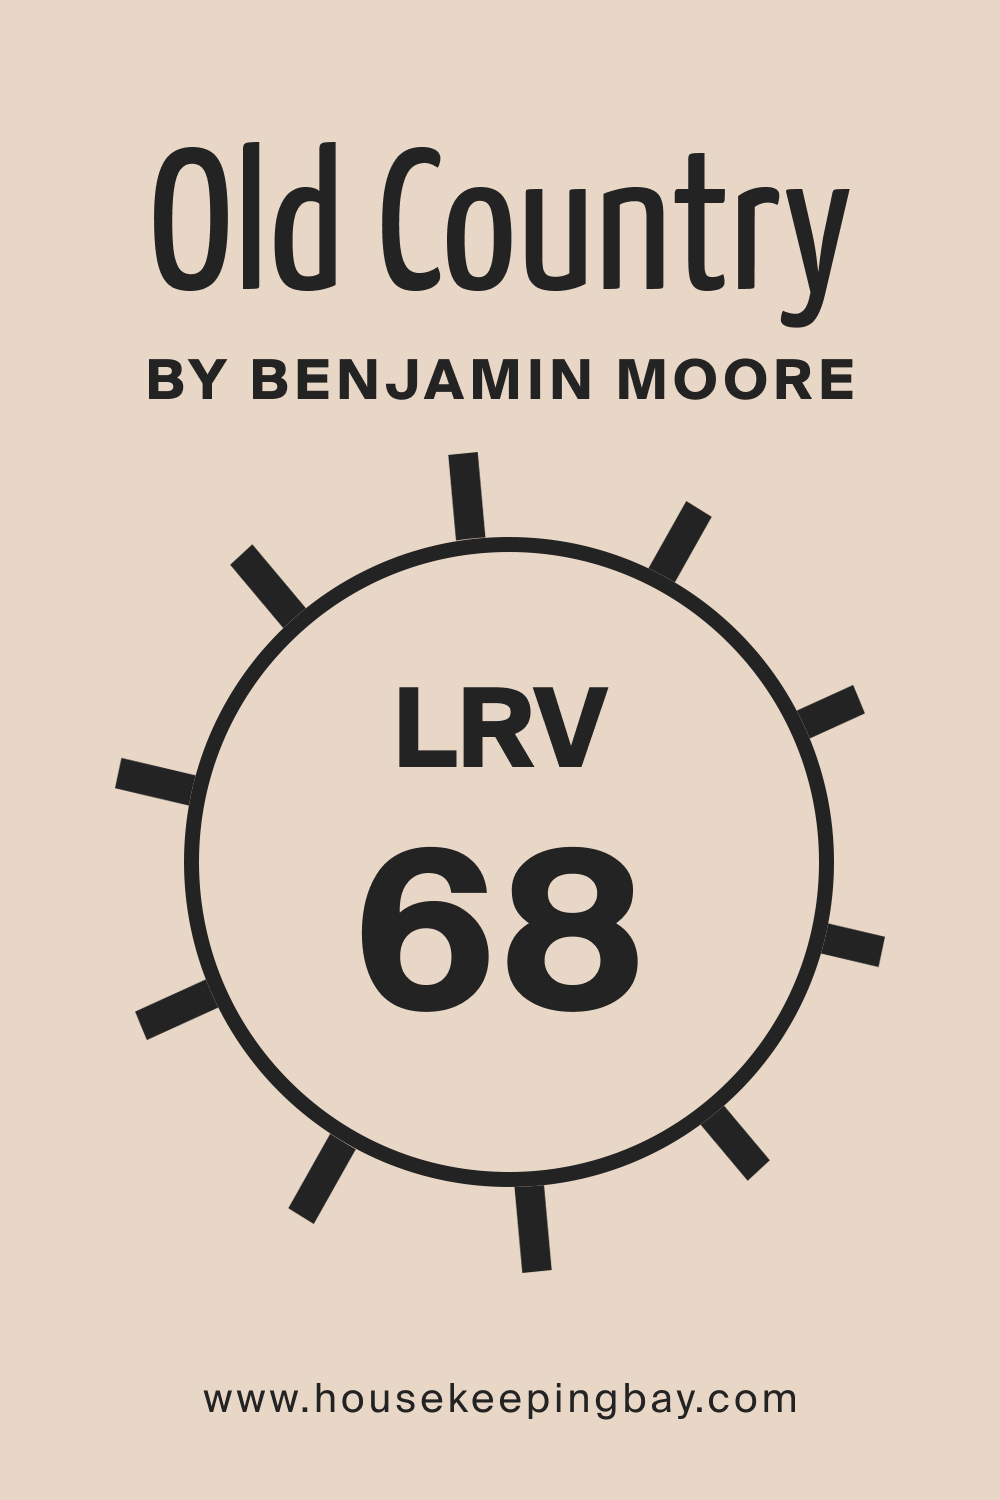 ld Country OC 76 by Benjamin Moore. LRV – 68